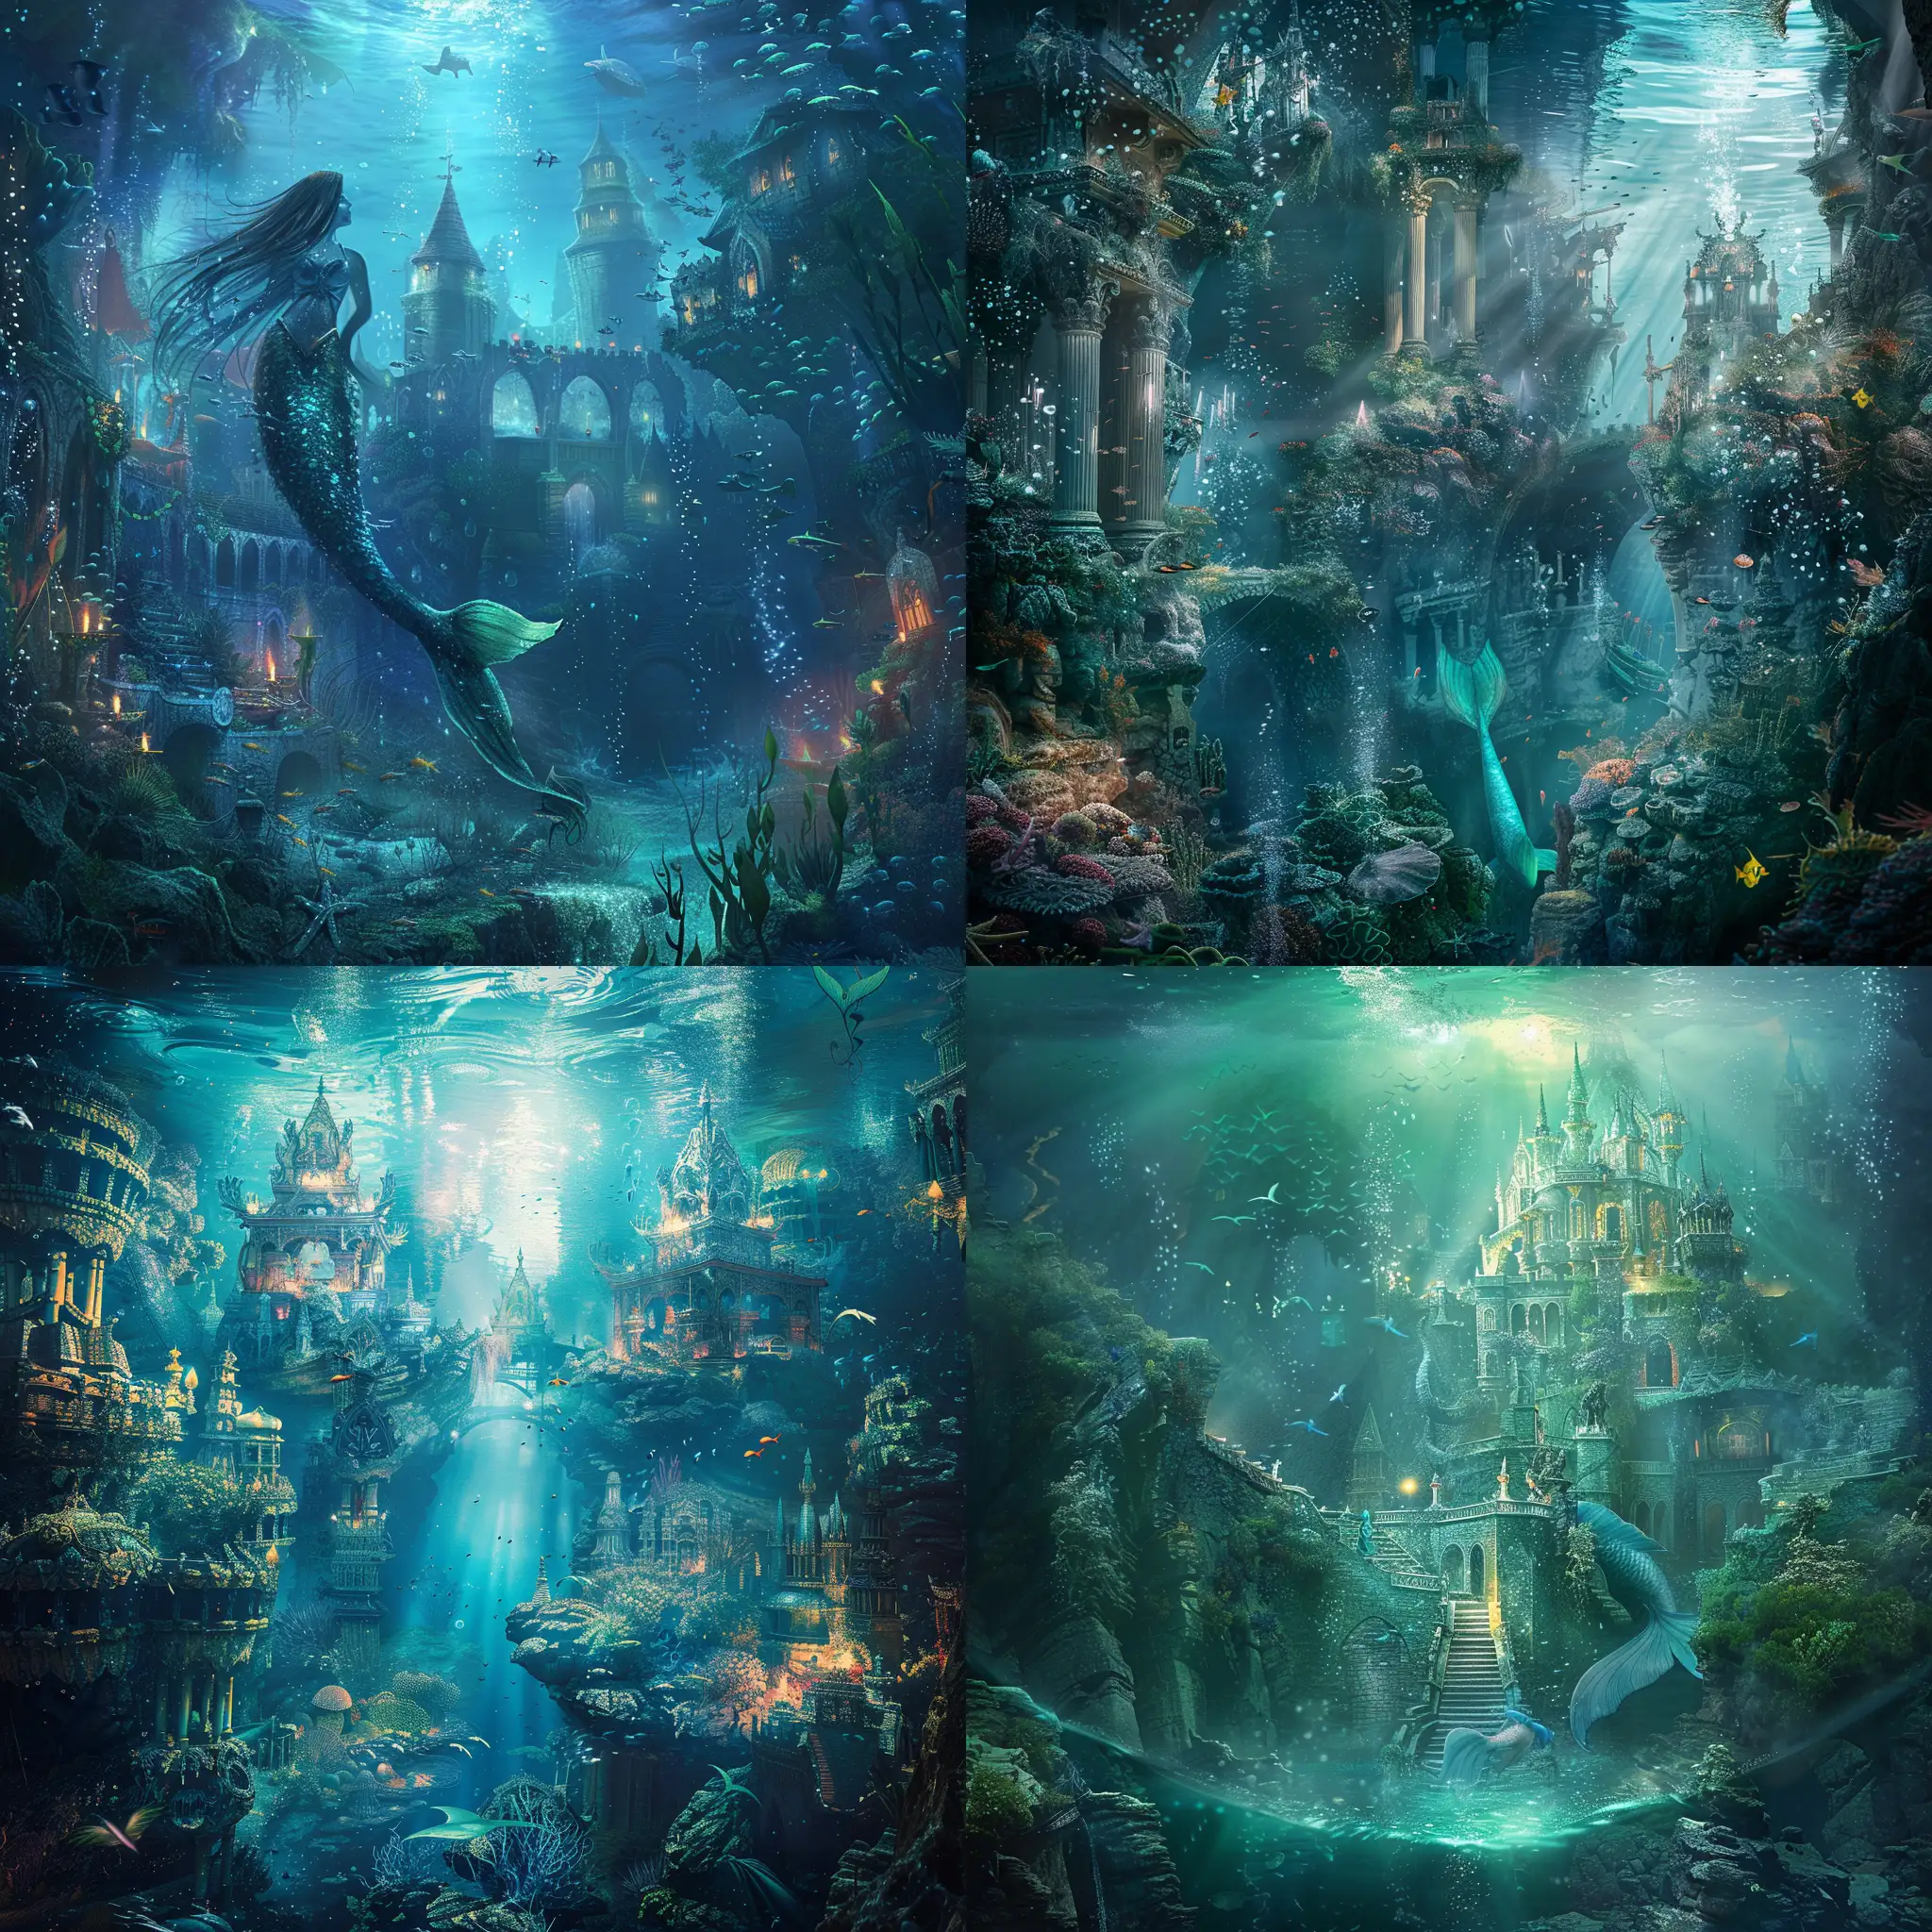 Enchanting-Mermaid-Kingdom-Underwater-Fantasy-Realm